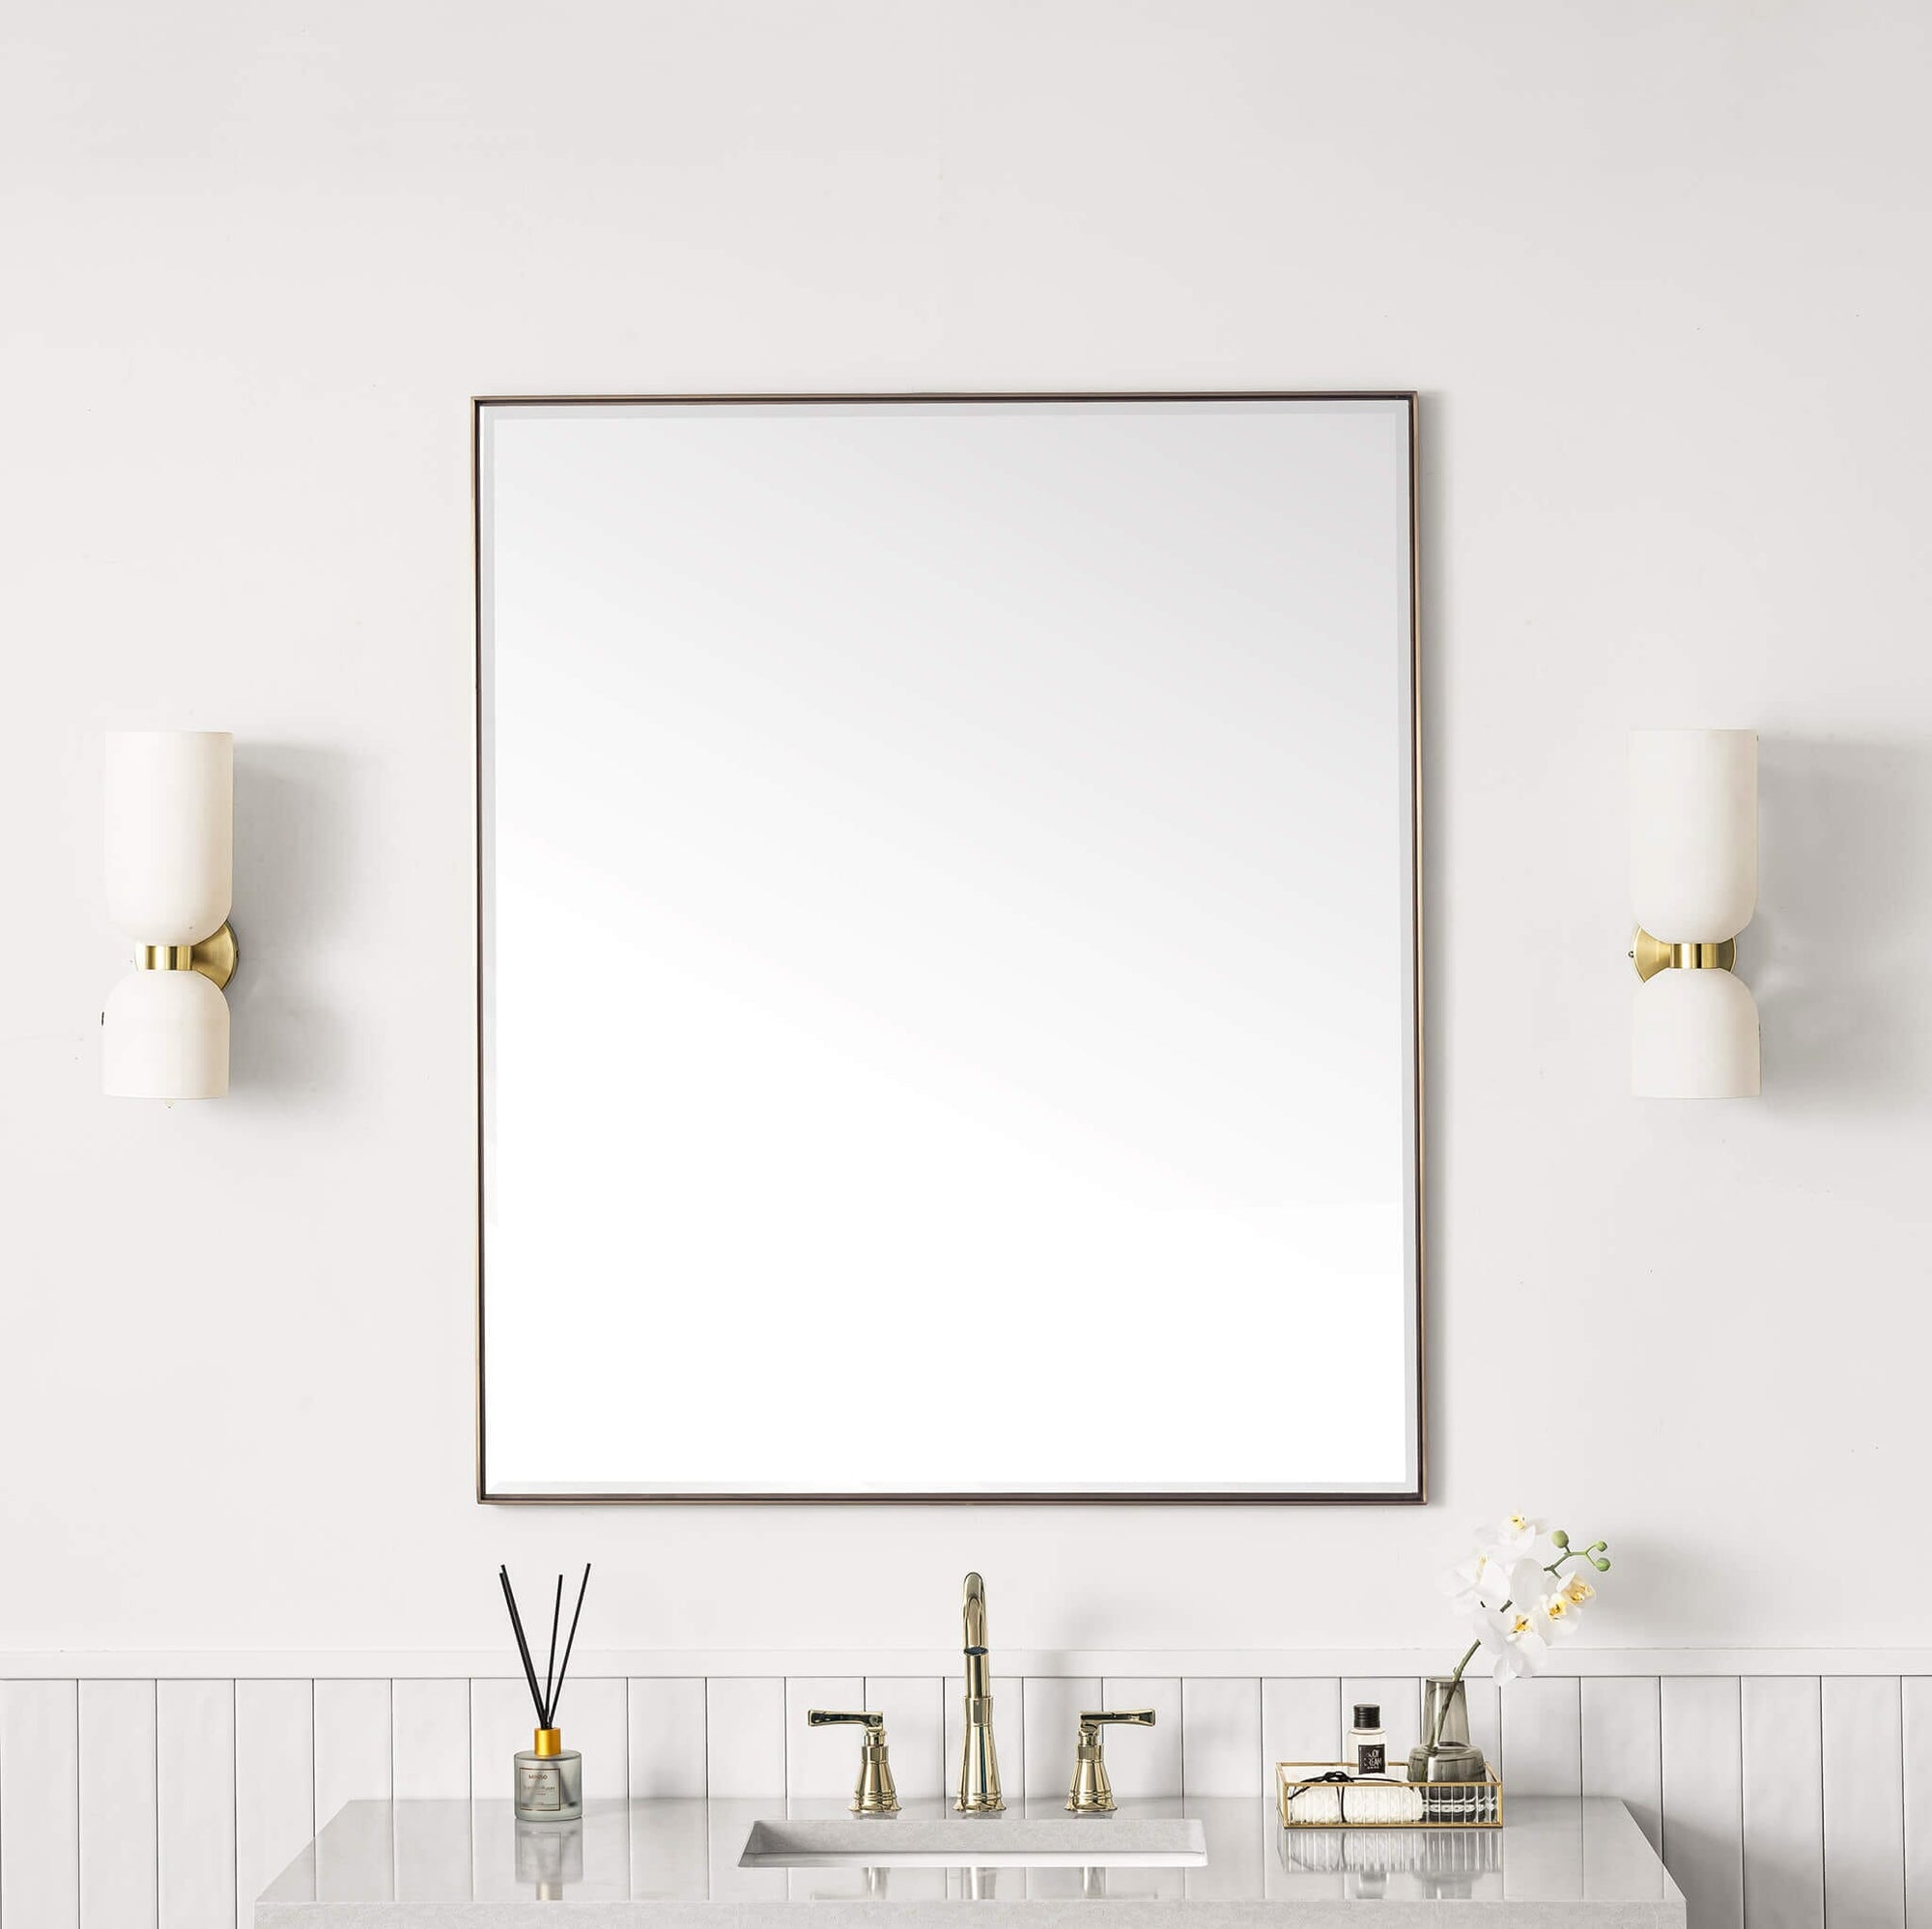 Sophisticated and Elegant Bathroom Mirror